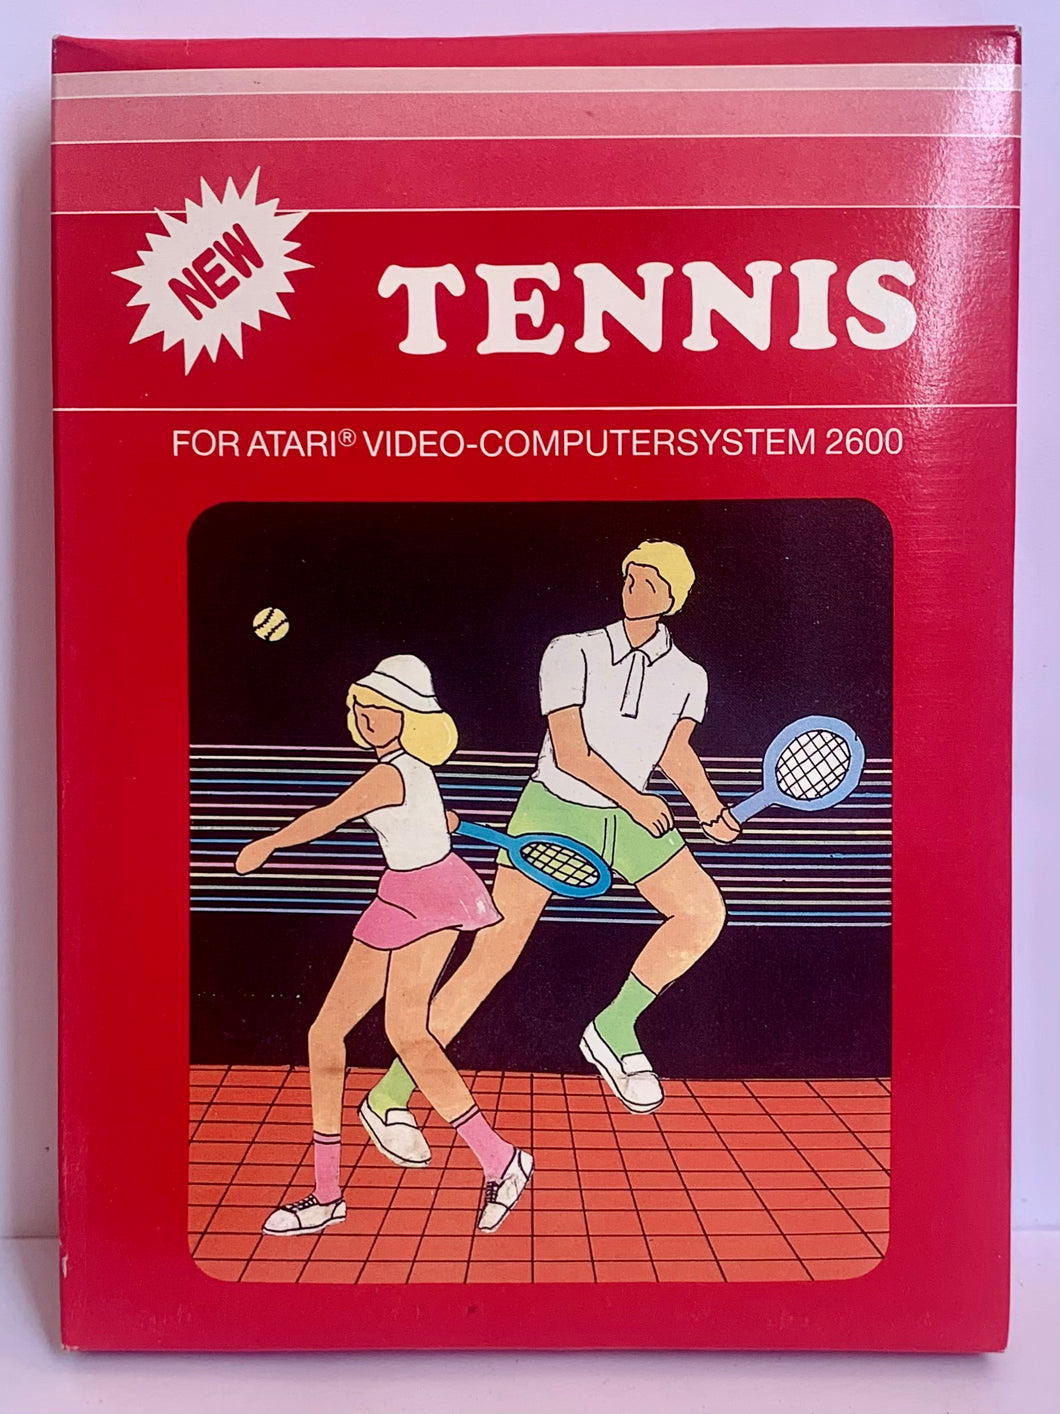 Tennis - Atari VCS 2600 - NTSC - CIB